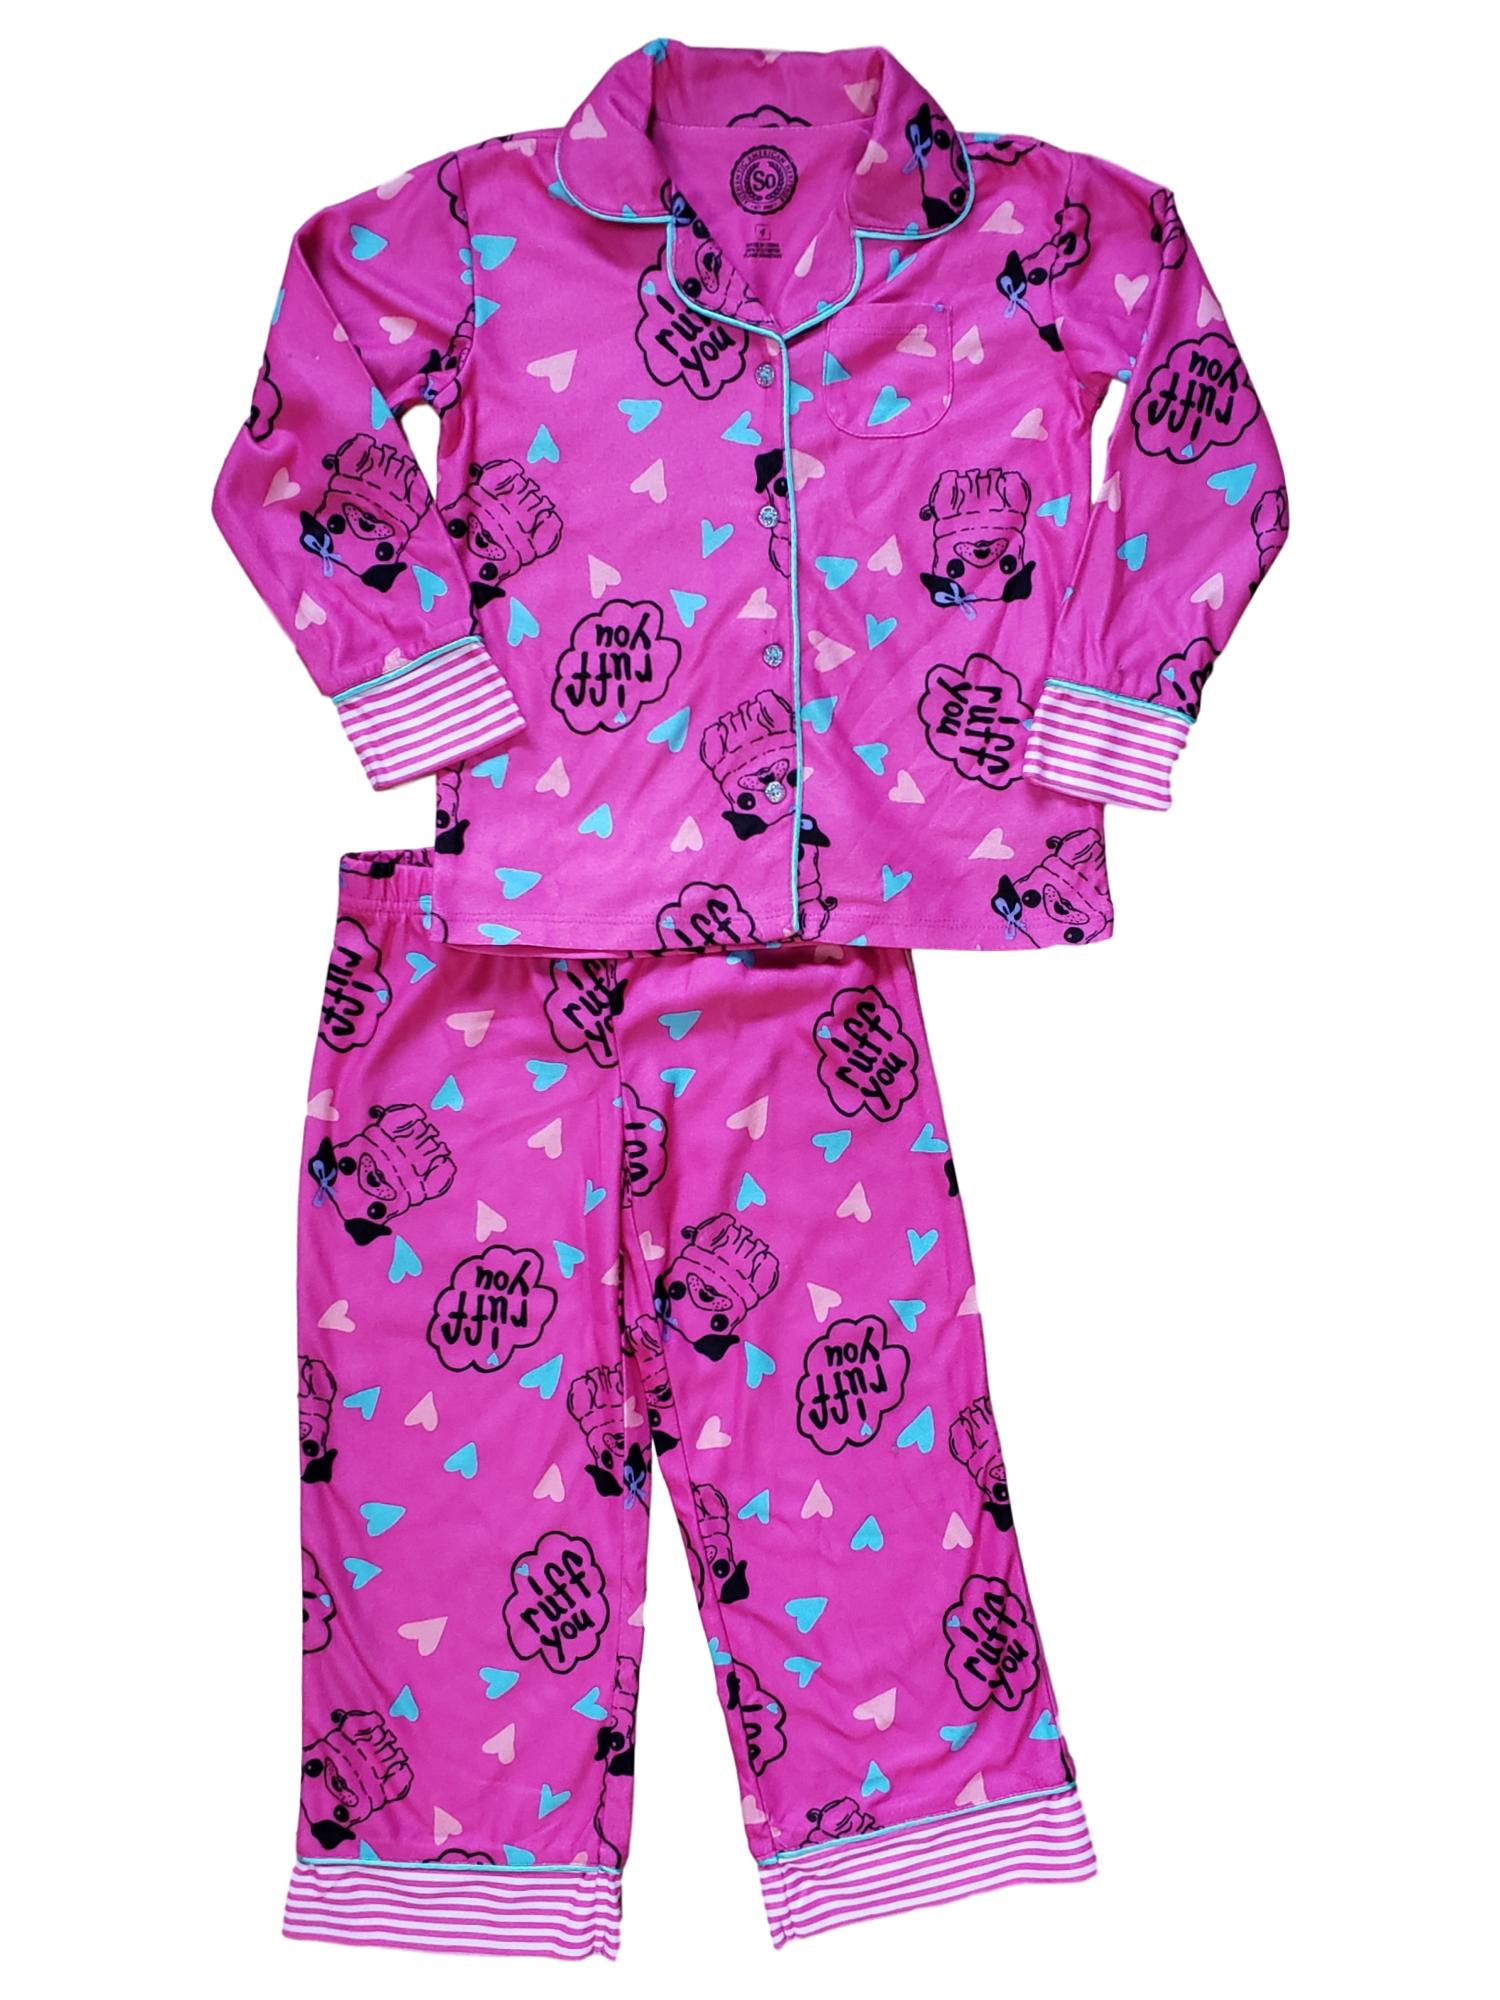 So Girls Hot Pink Pug Dog Puppy Hearts I Ruff You 2 Piece Flannel Pajama PJ Set 4